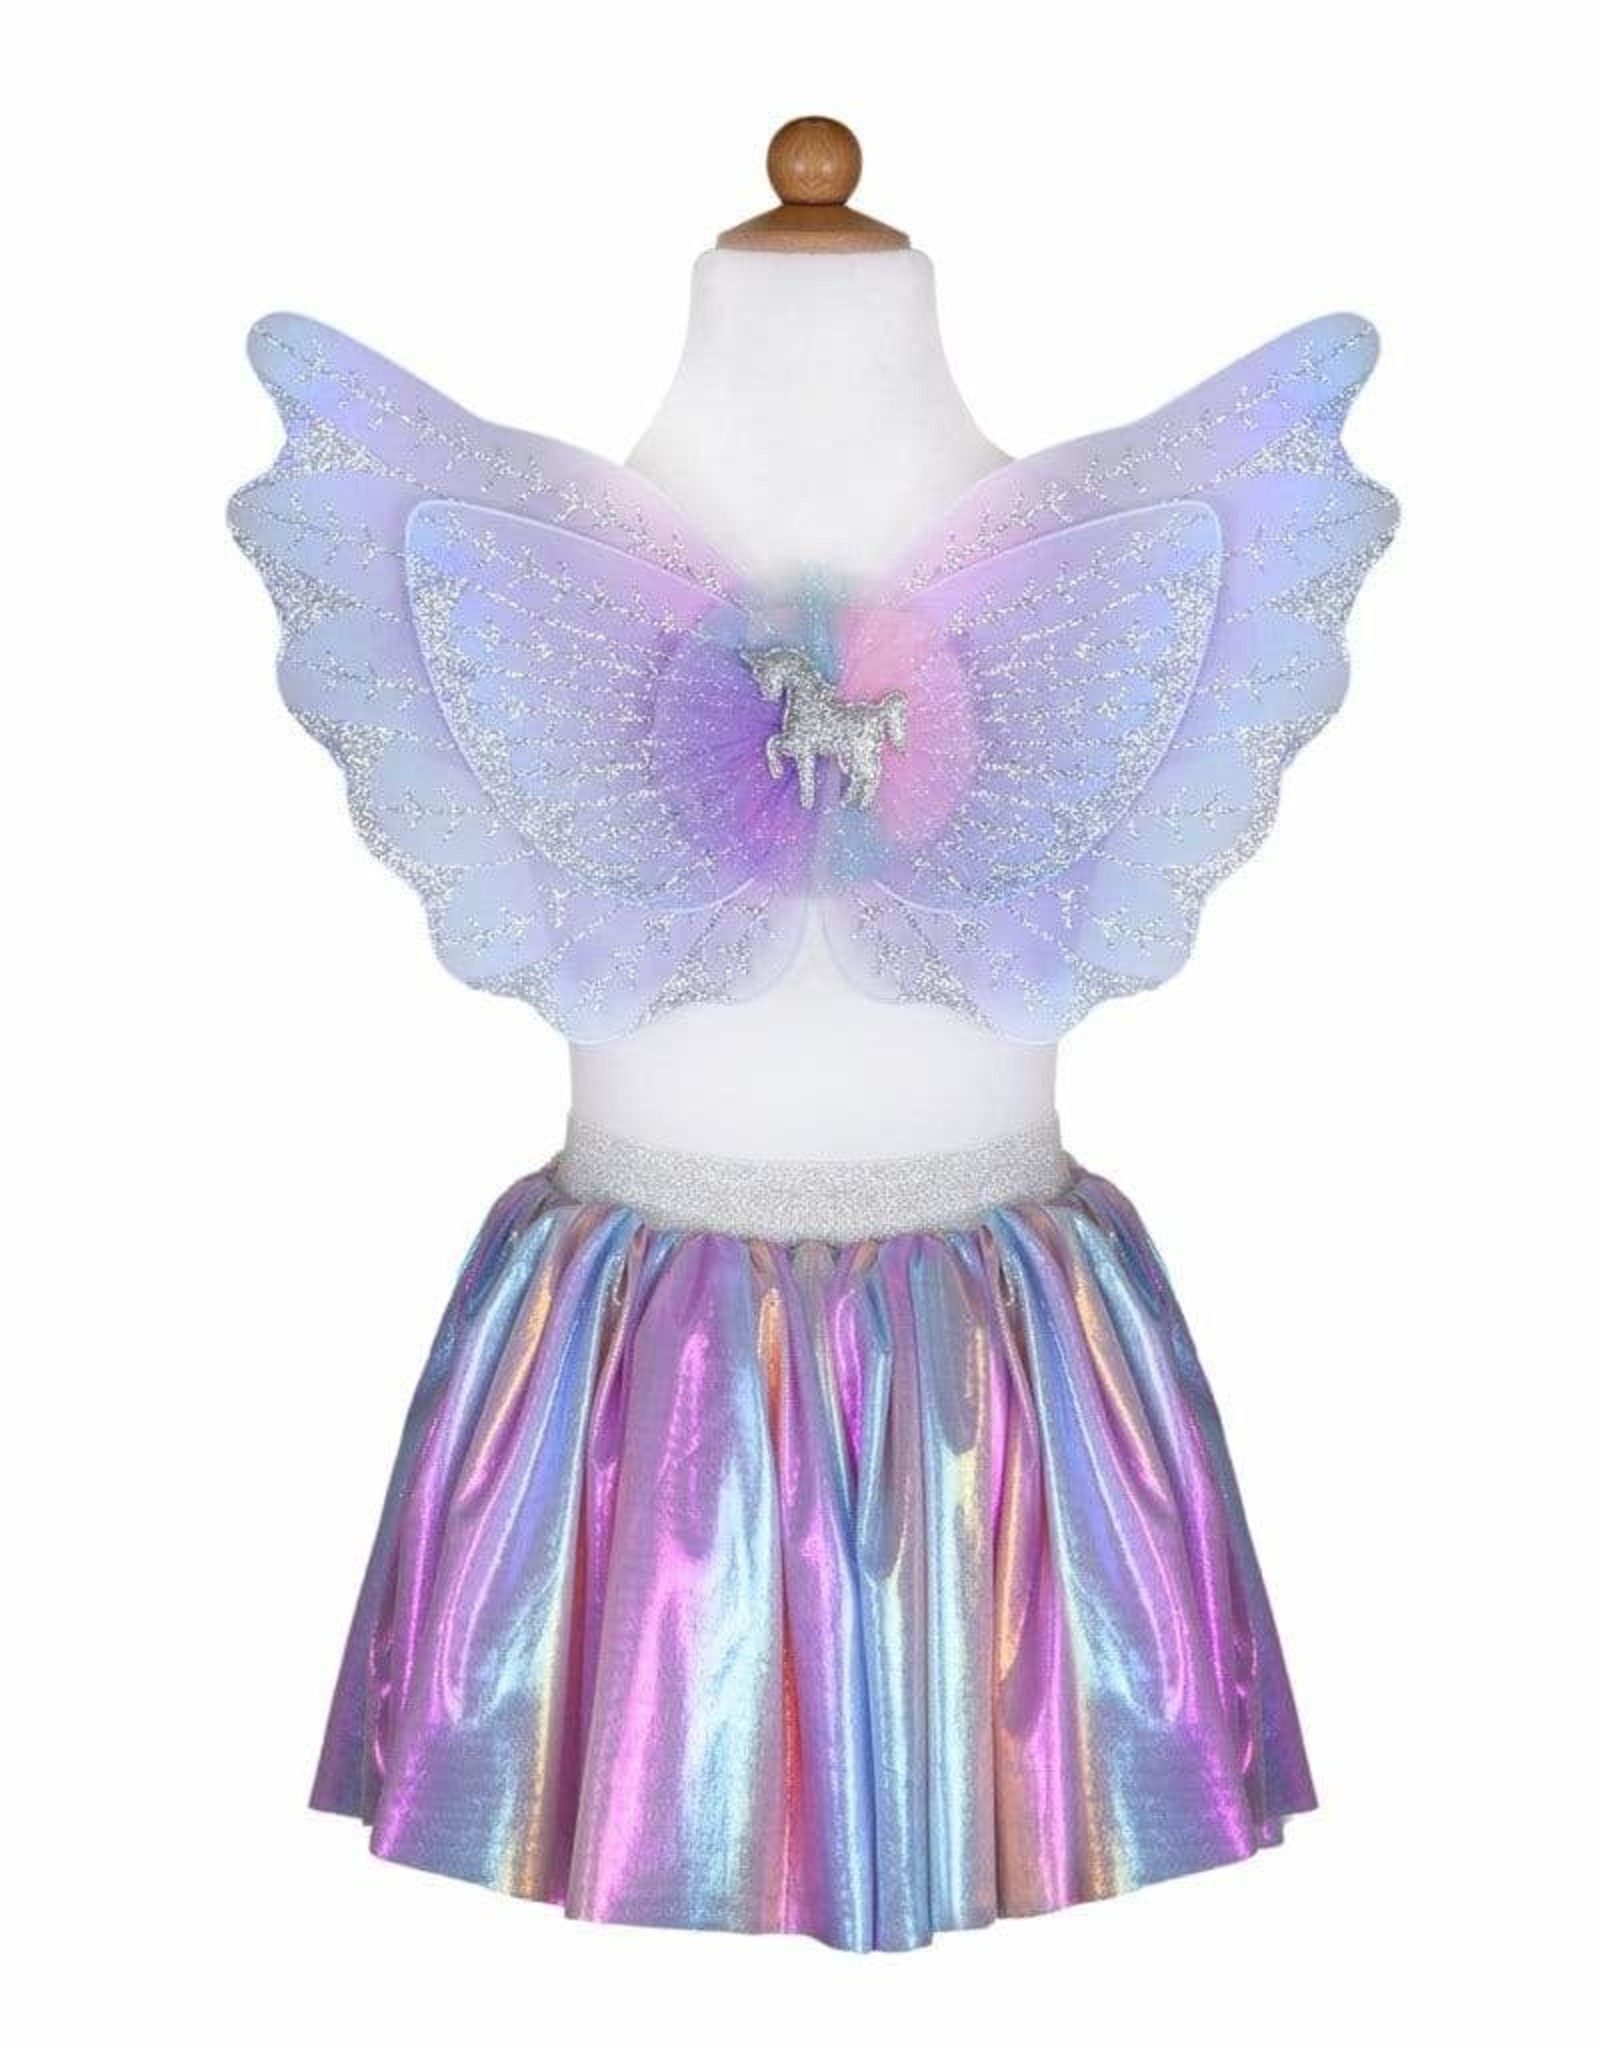 Great Pretenders Magical Unicorn Skirt & Wings, Pastel, Size 4-6